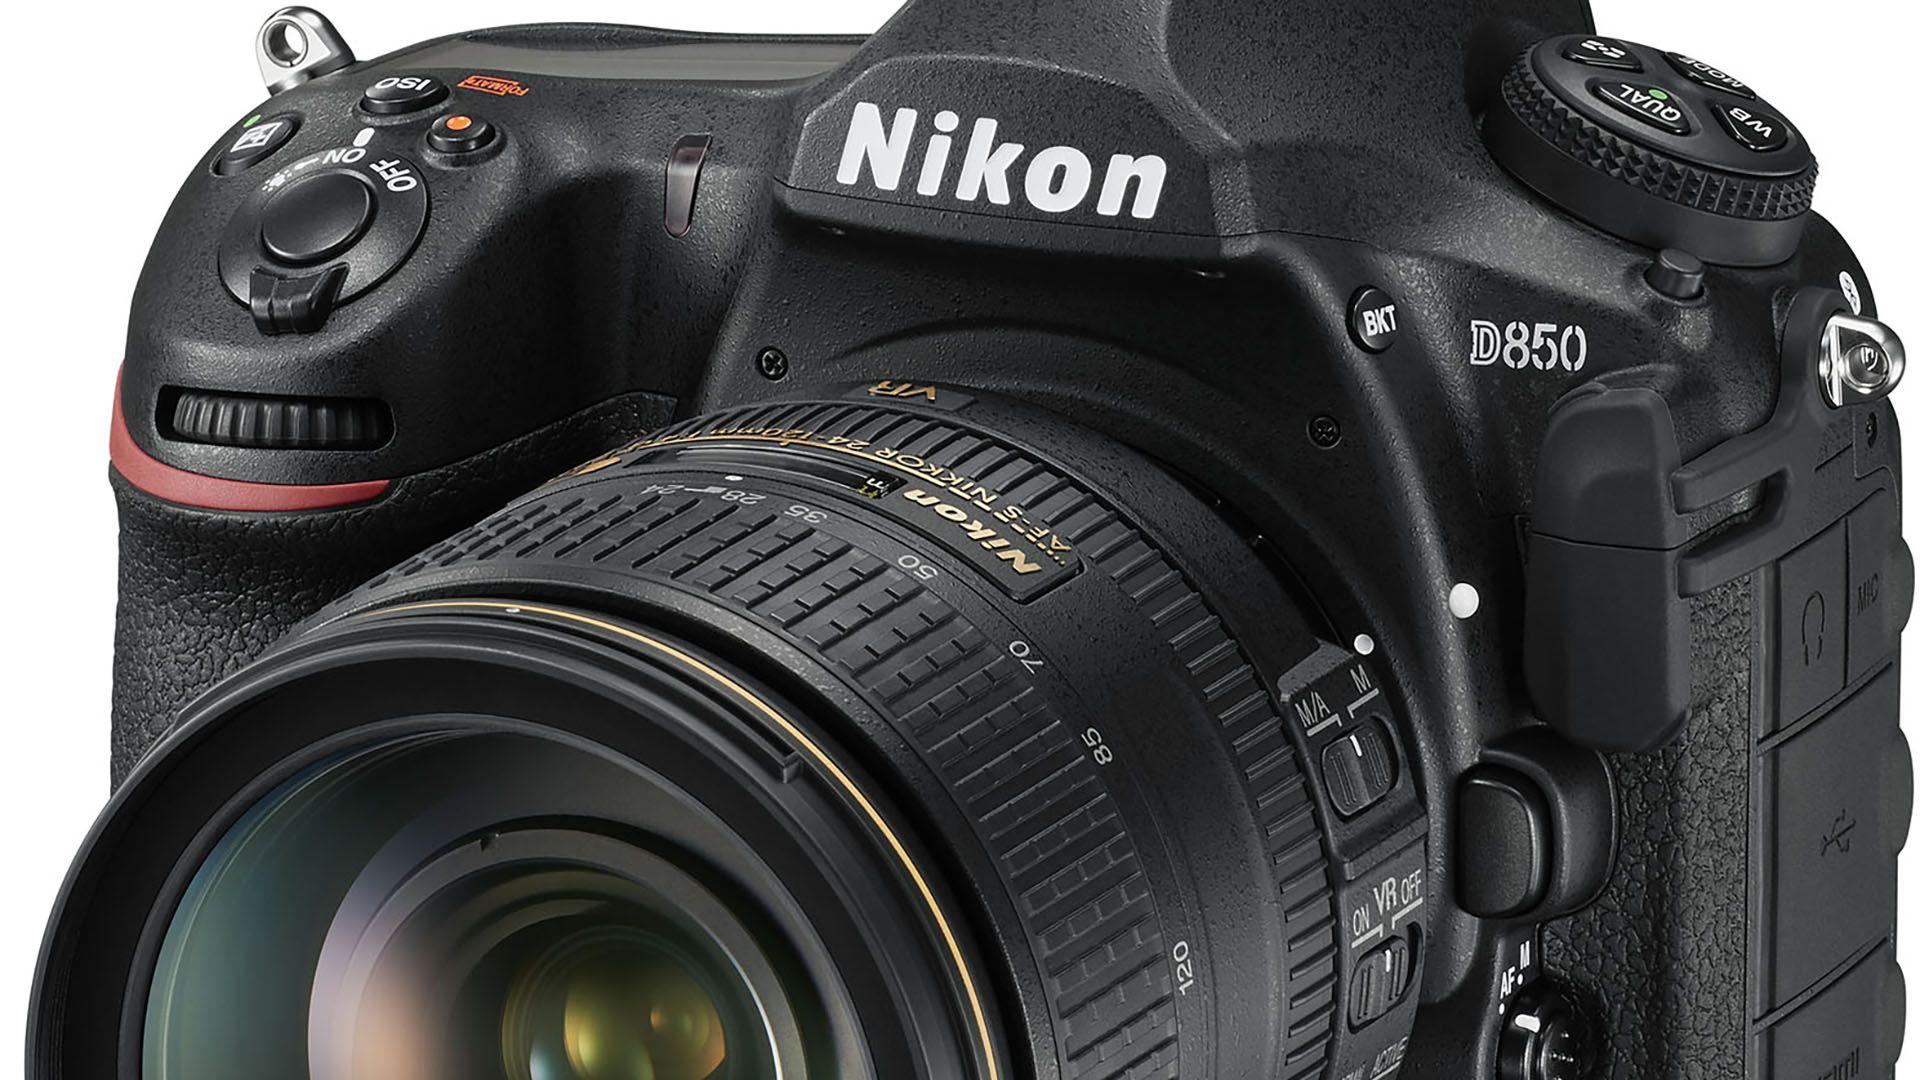 Nikon D850 Pro DSLR Rivals Medium Format Quality, Adds 4K Video